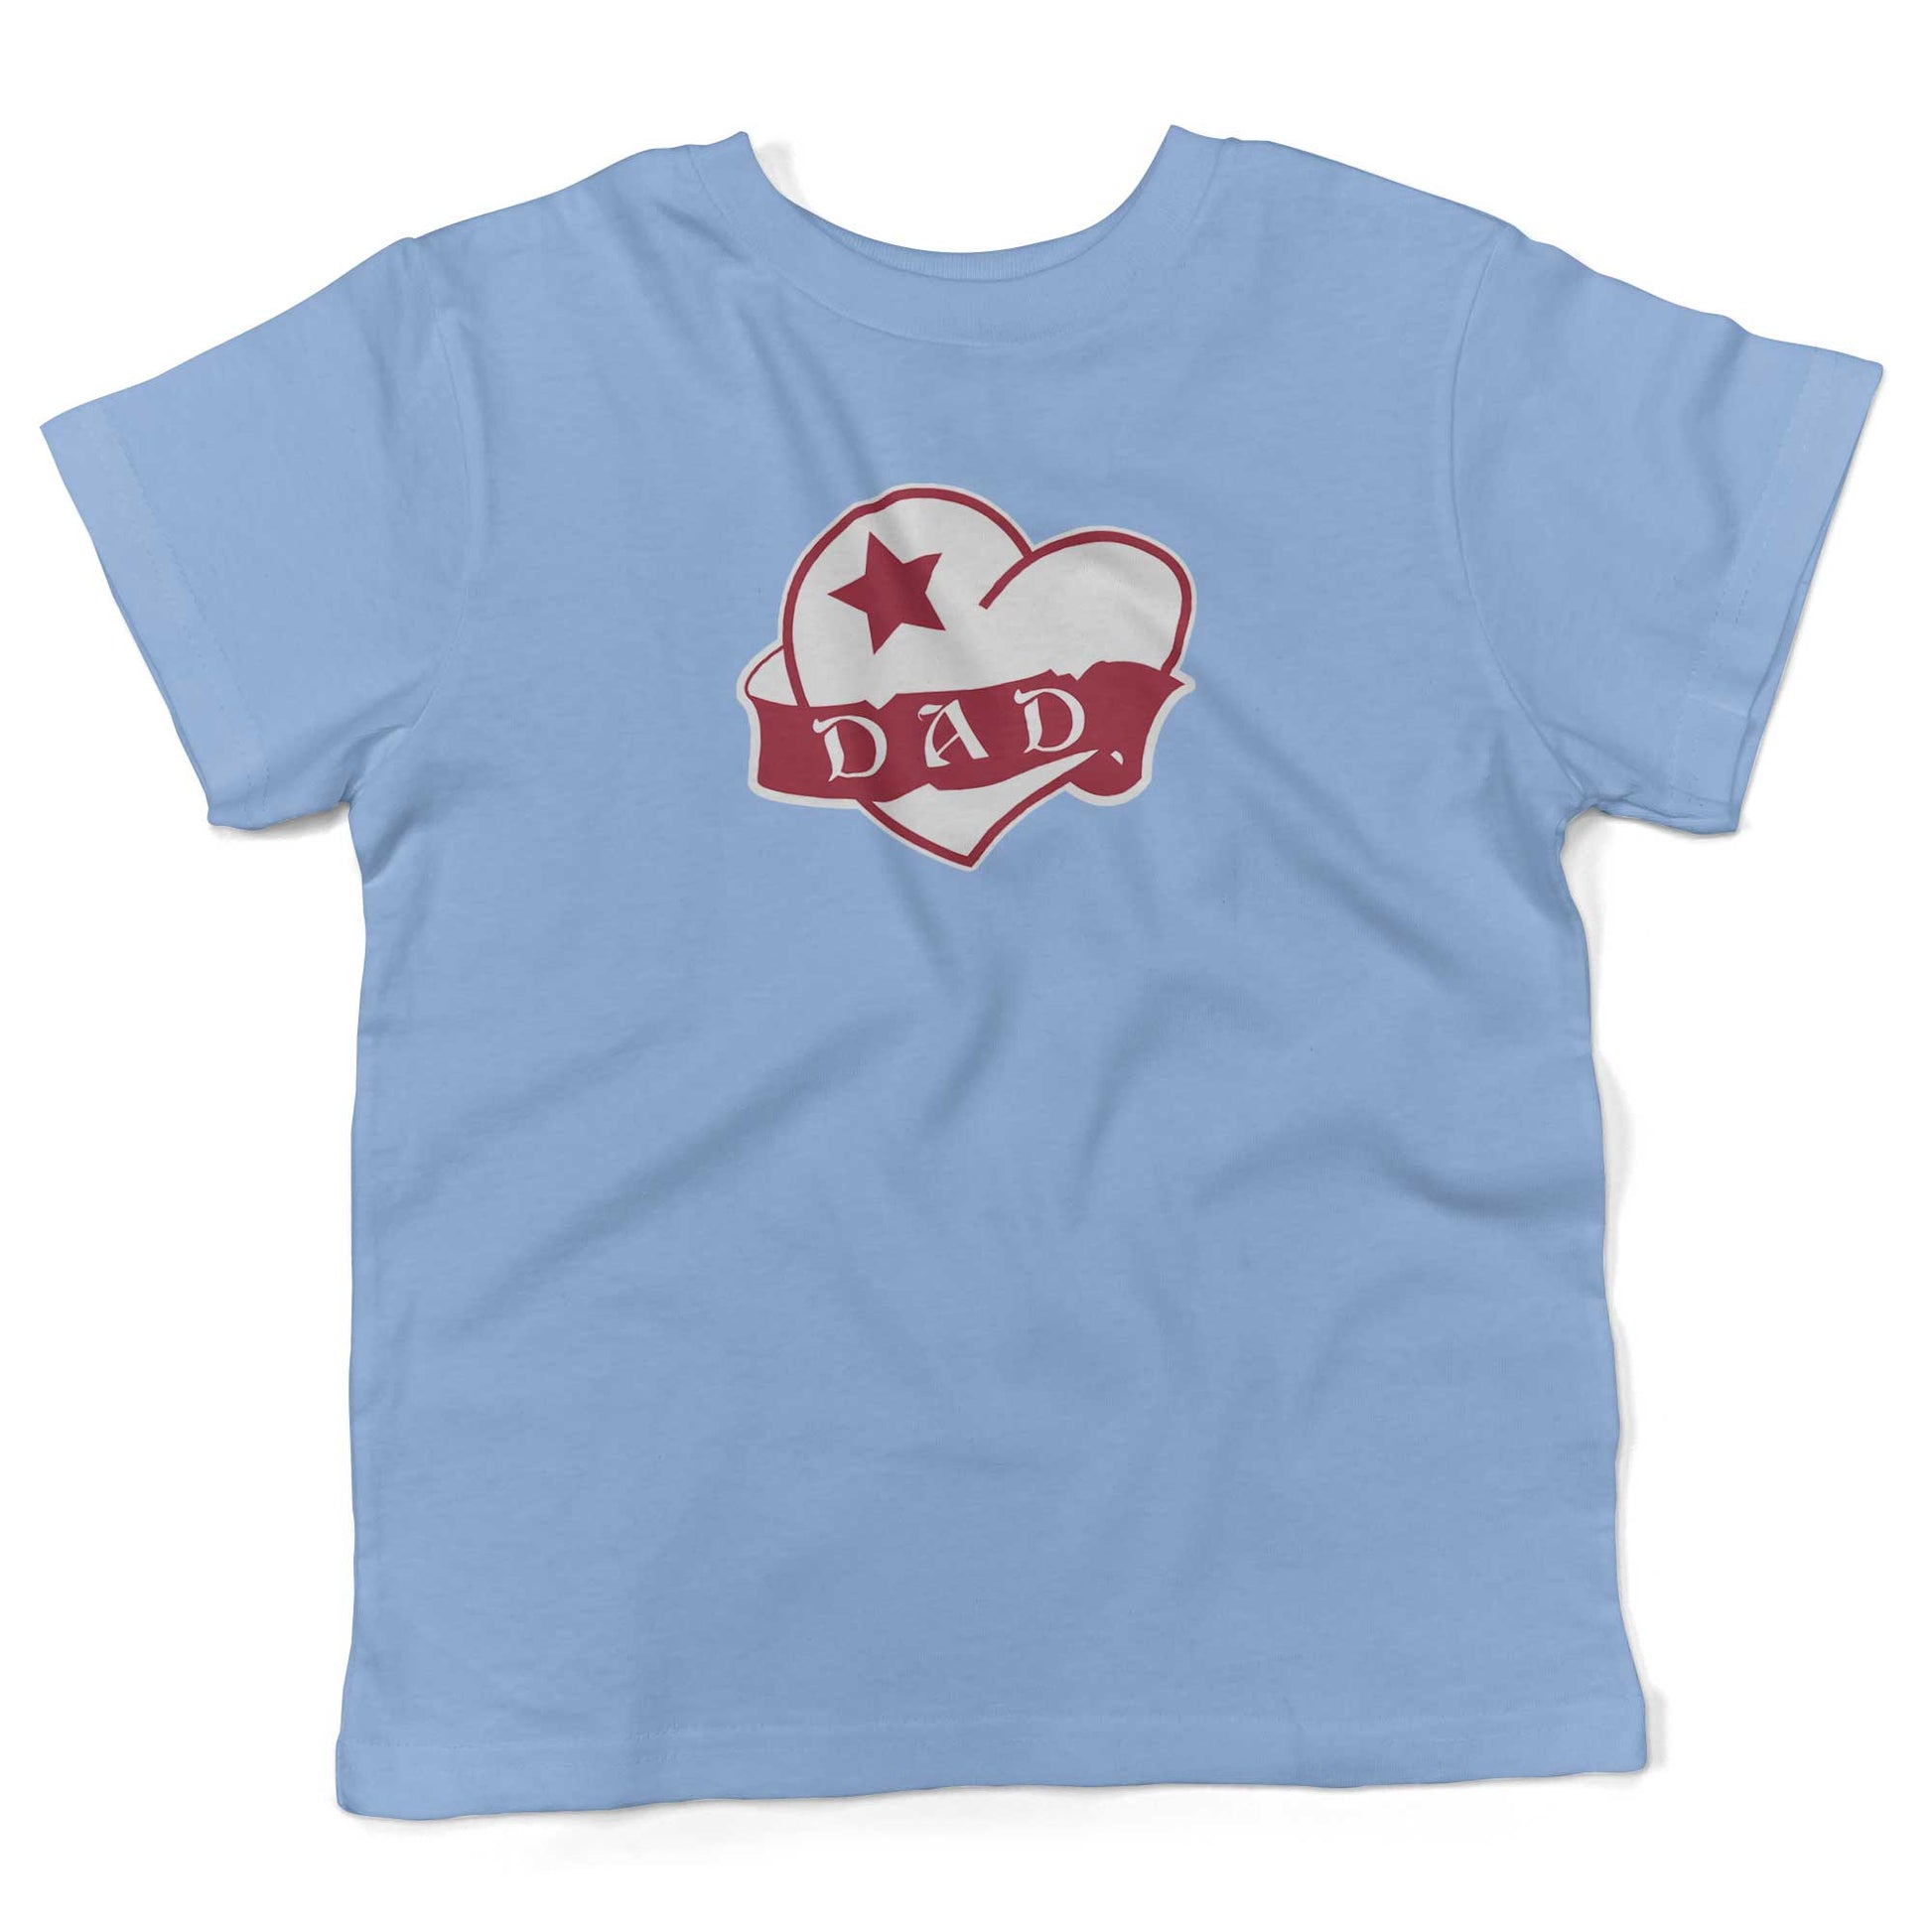 Dad Tattoo Heart Toddler Shirt-Organic Baby Blue-2T